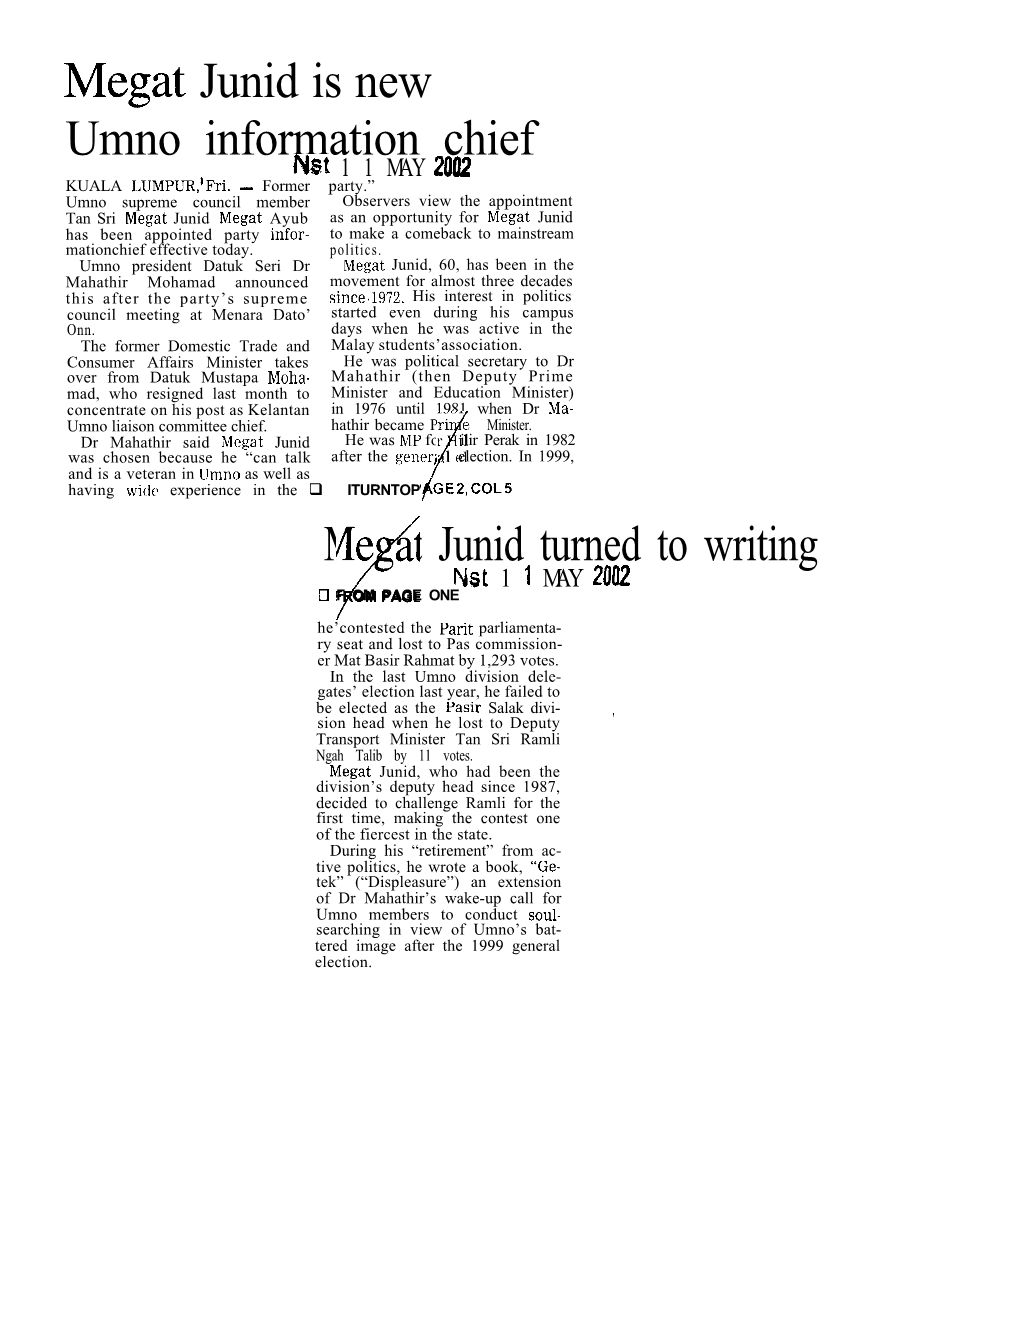 Megat Junid Is New Umno Information Chief (NST 11/05/2002)